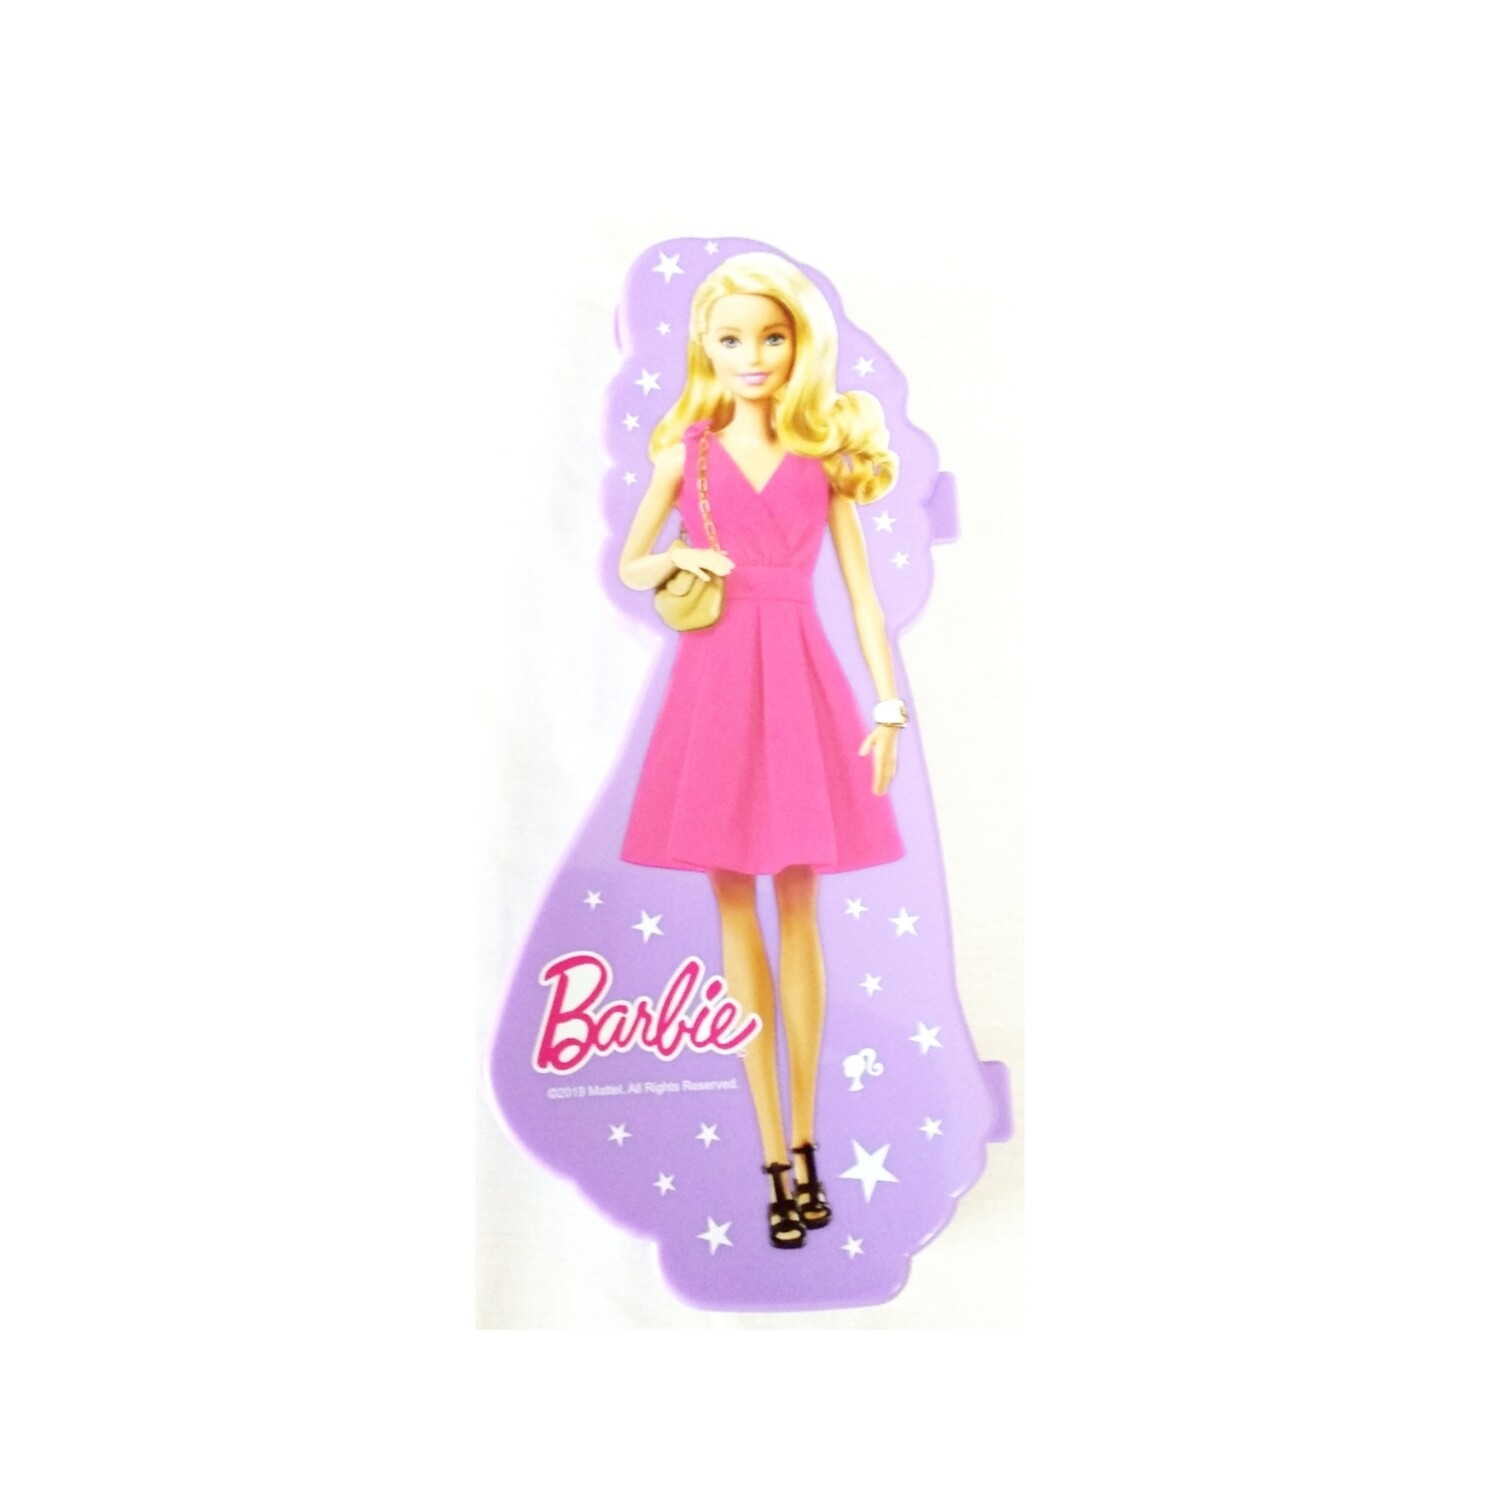 Barbie Pencil Box